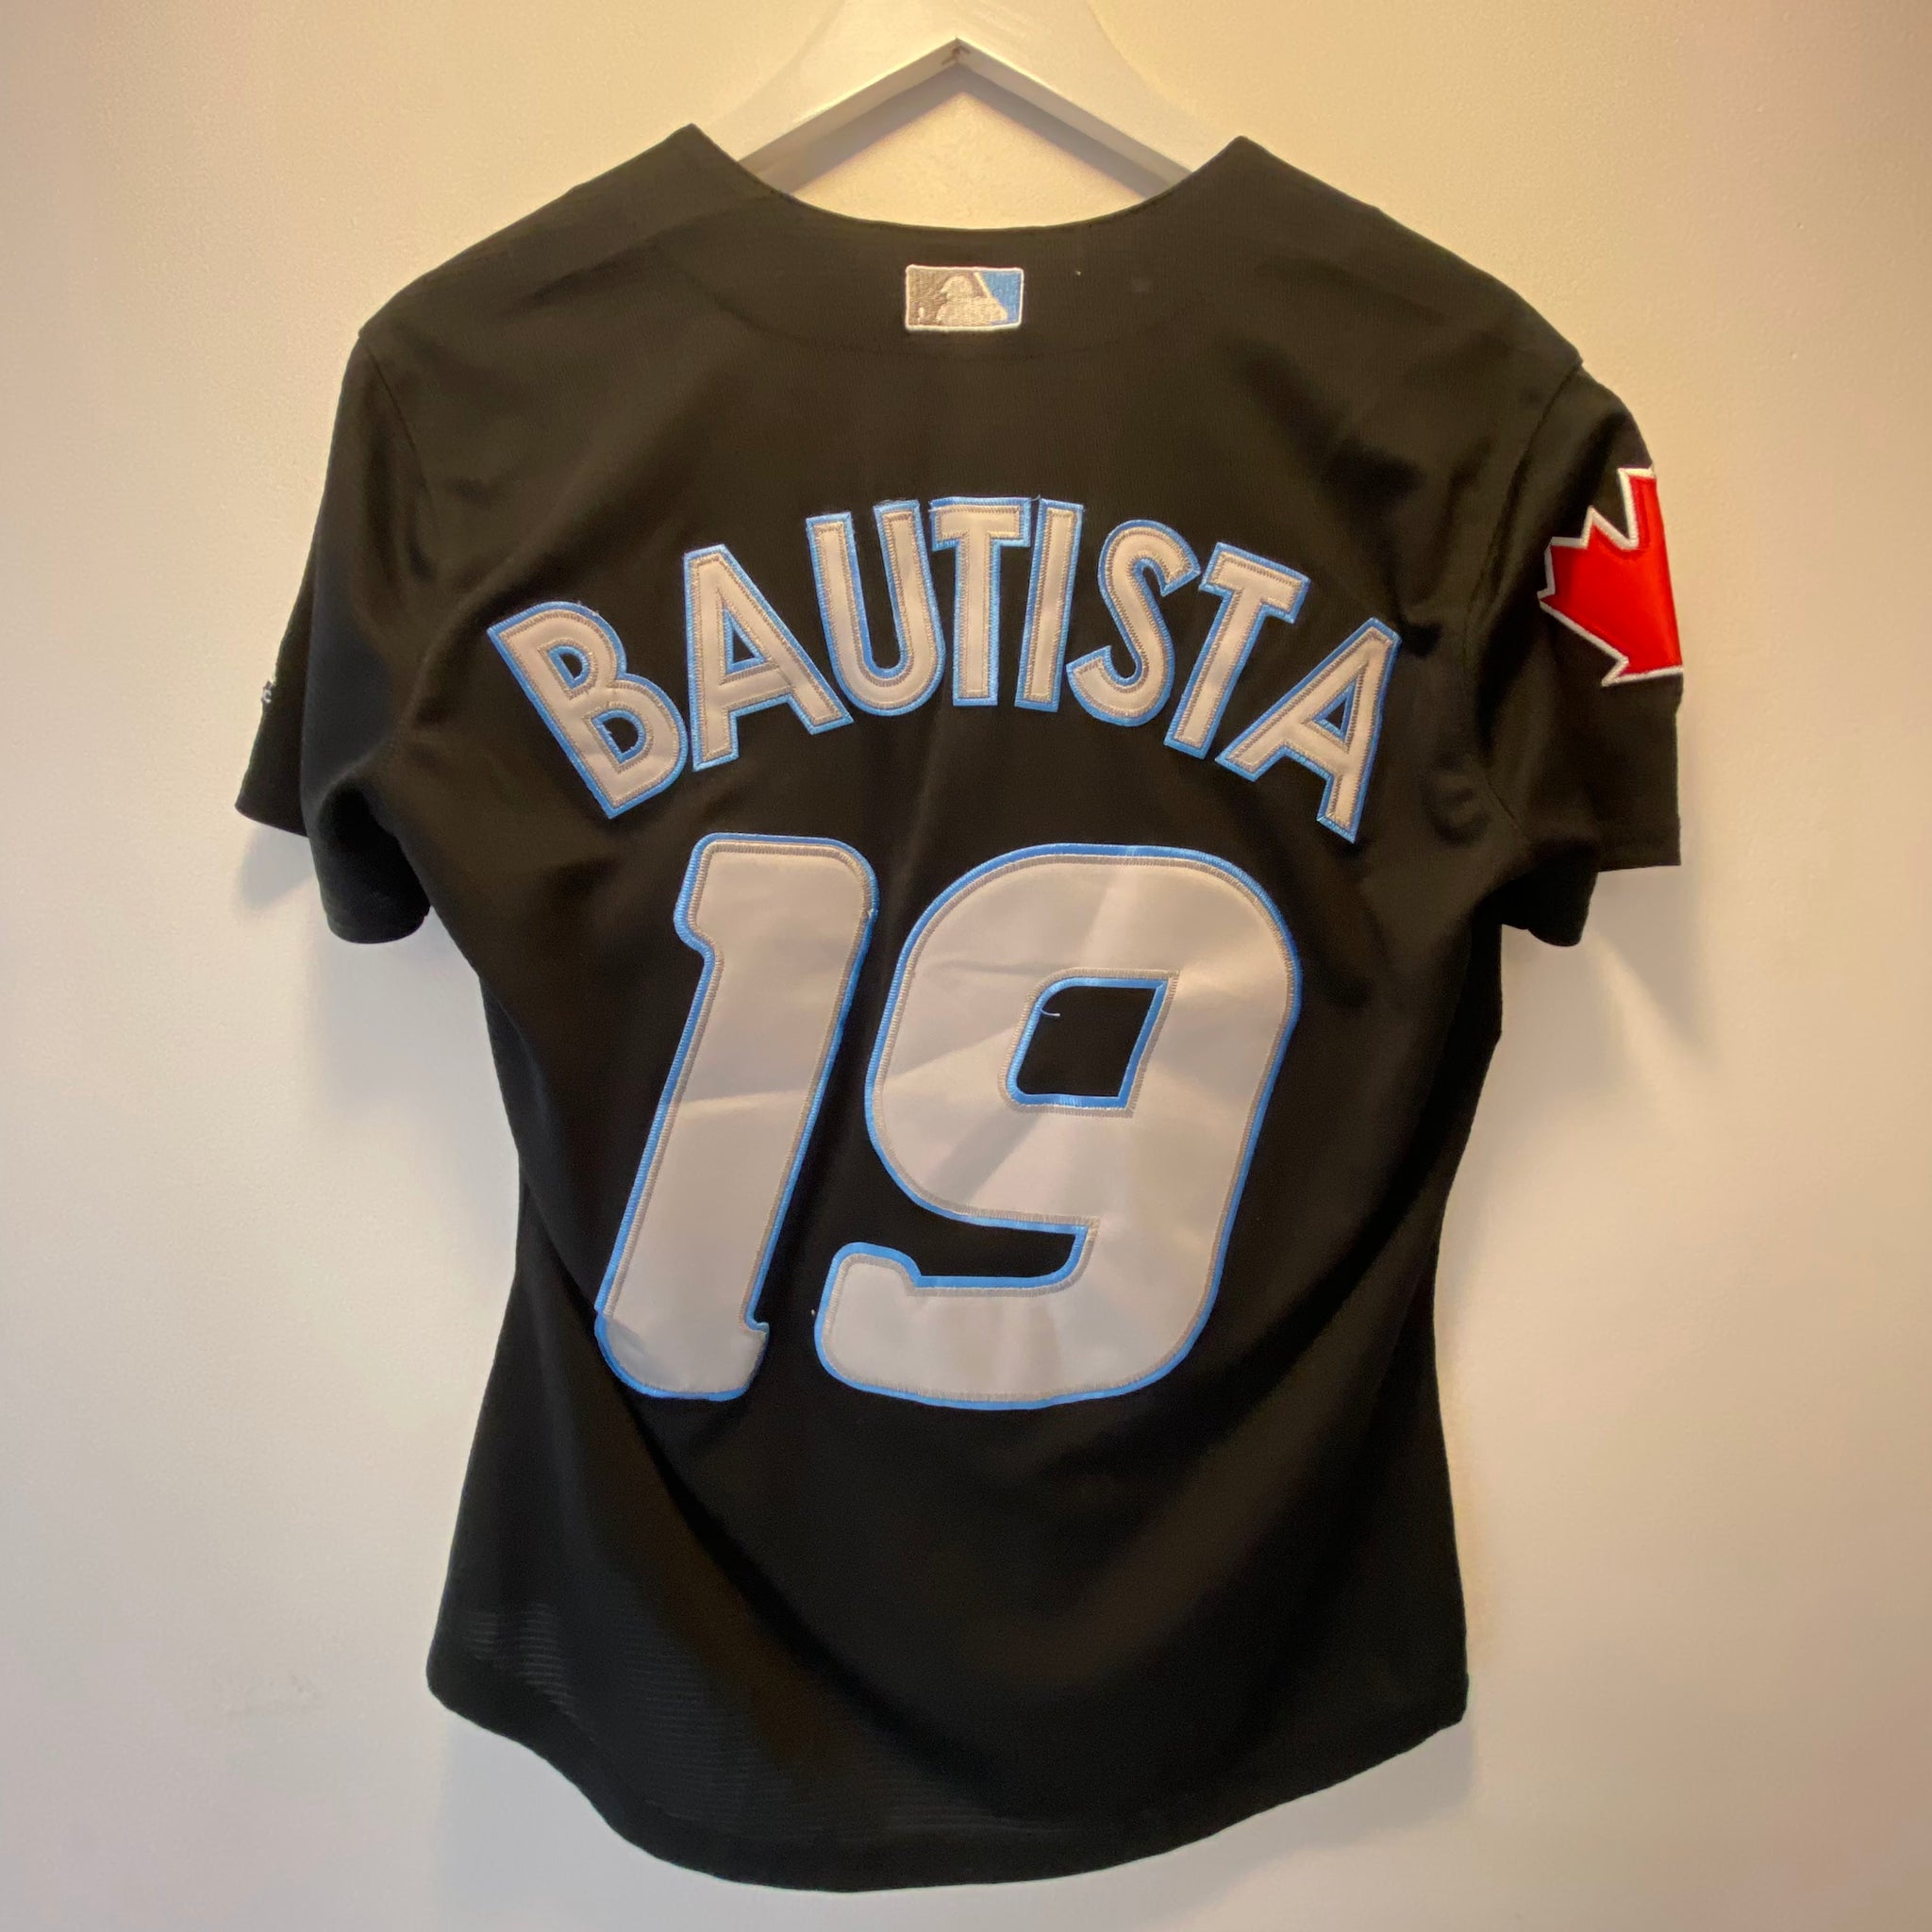 Bautista Jays Jersey- M